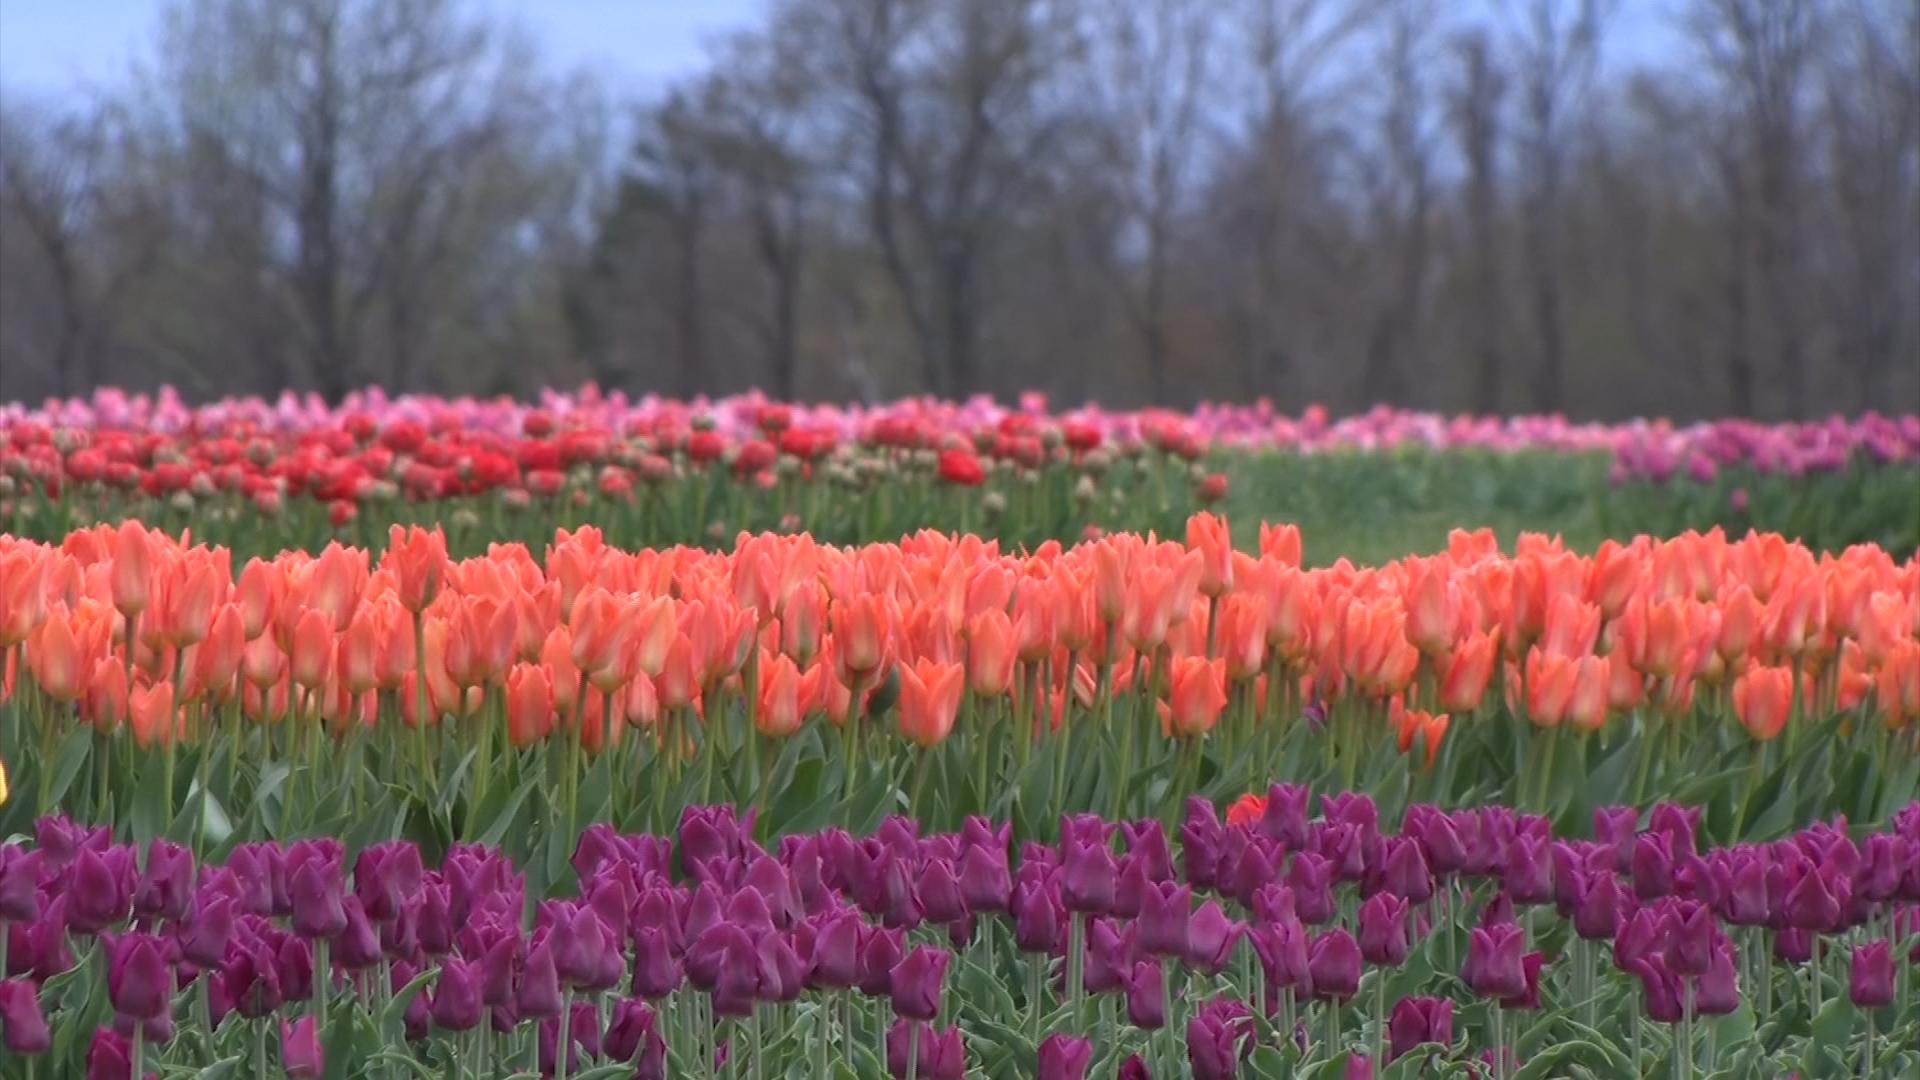 Nearly 2 million tulips on display at Jersey farm